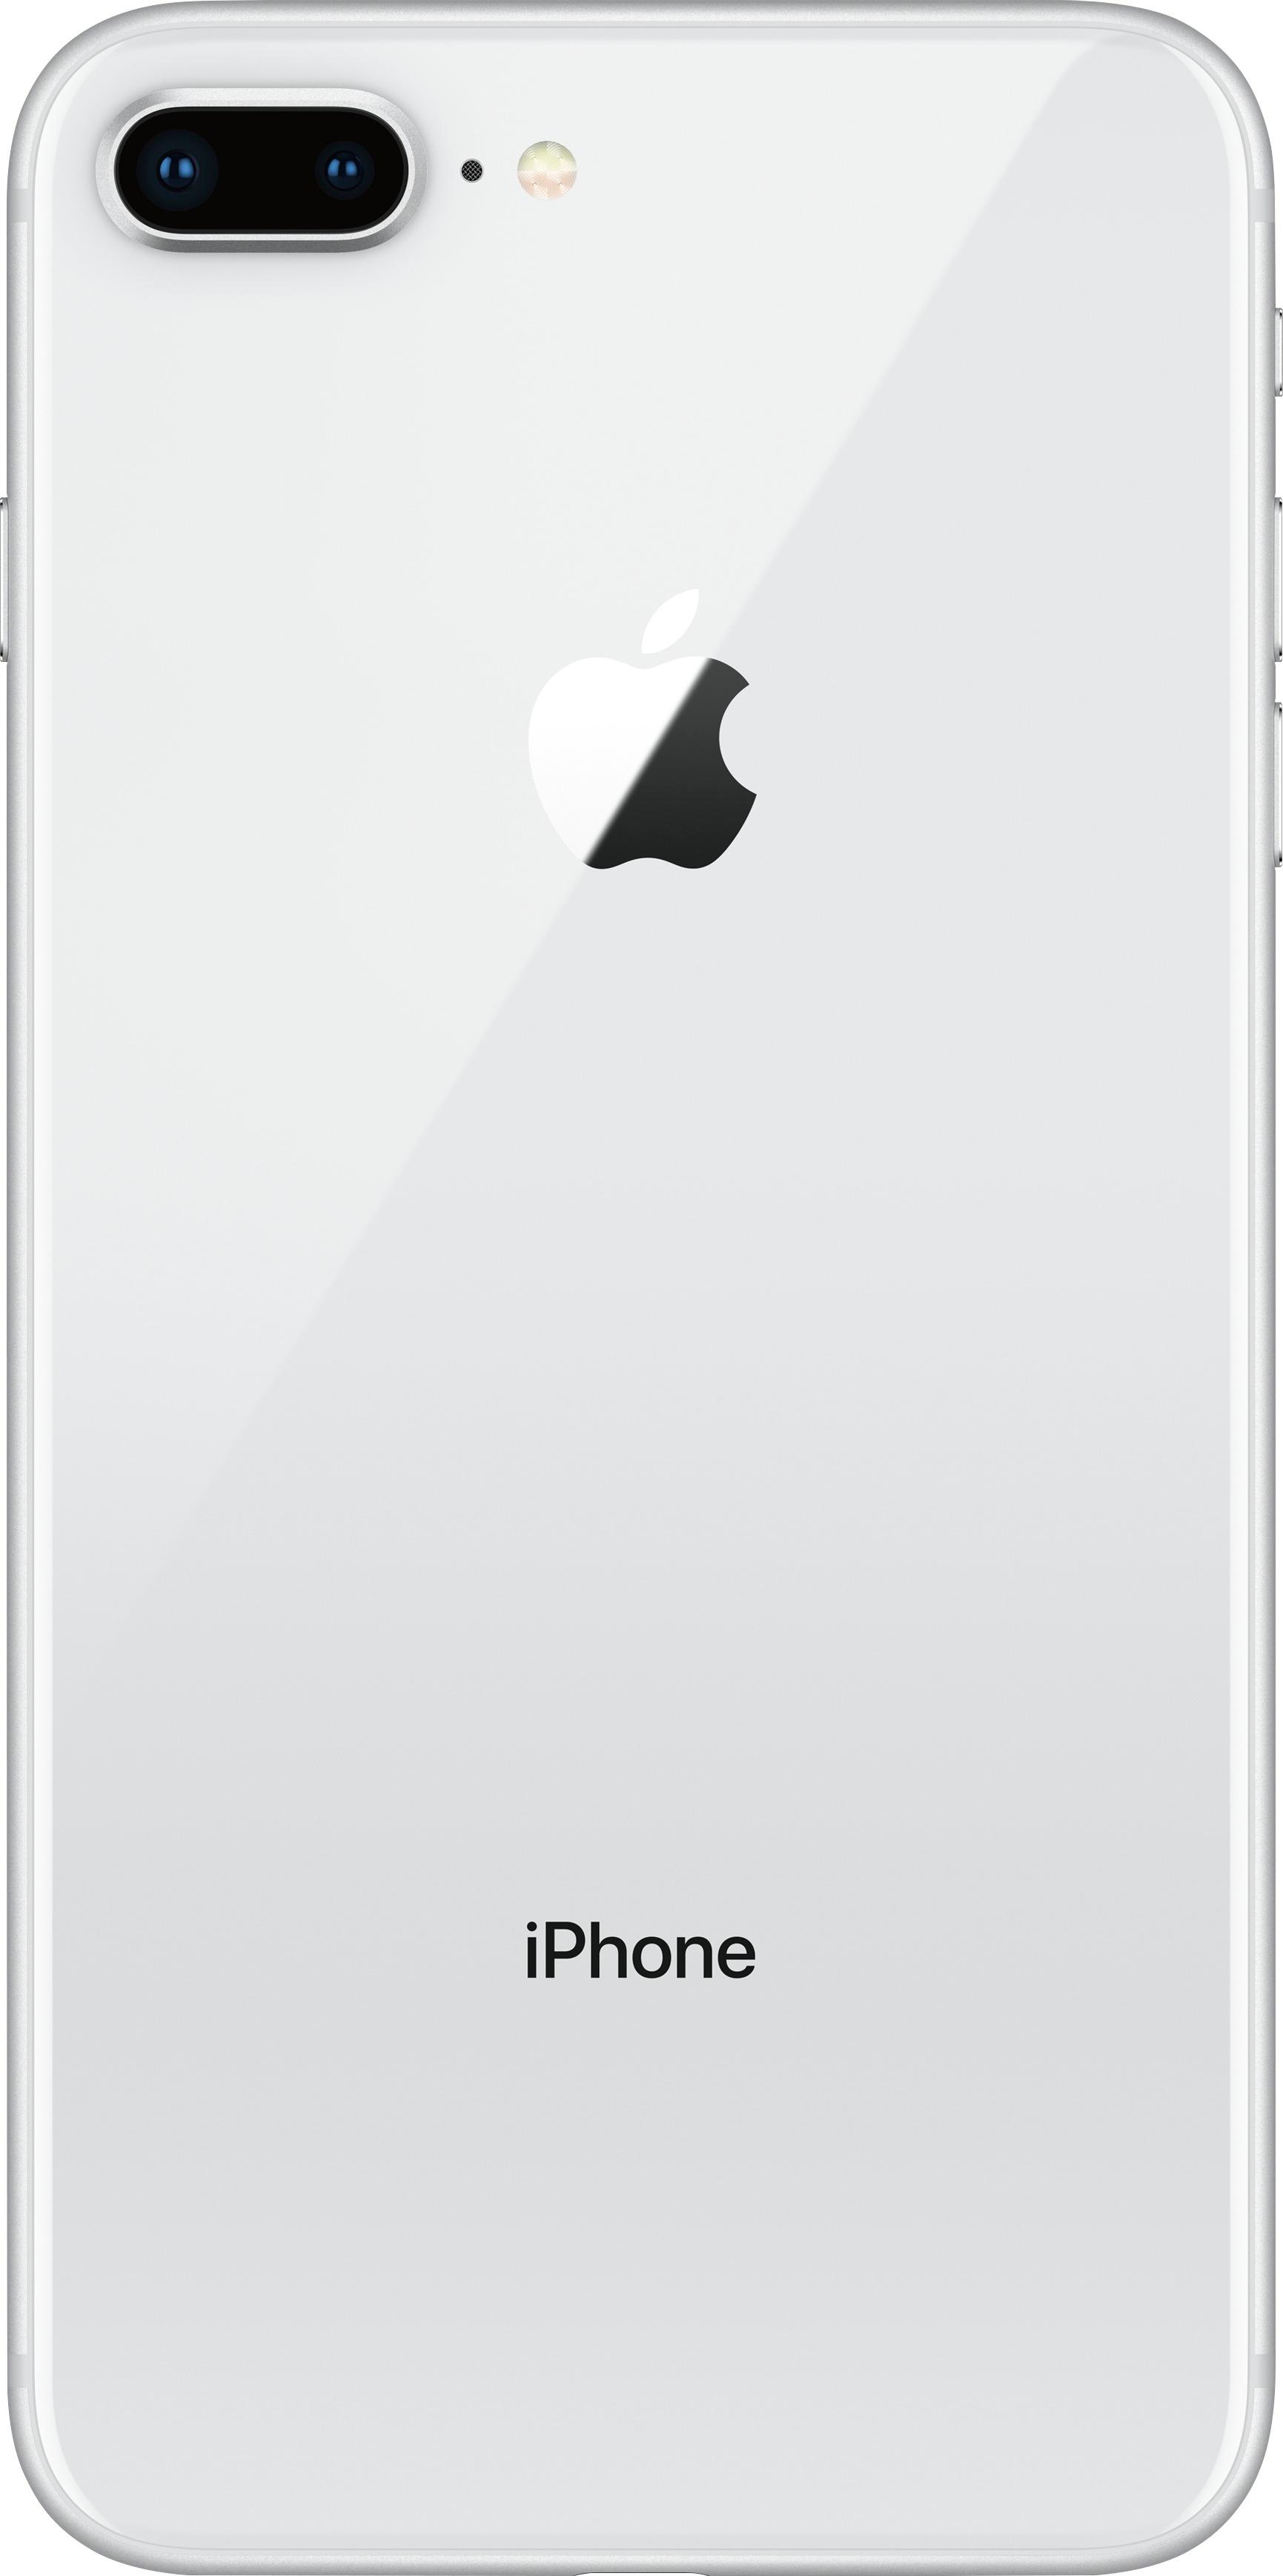 Pantalla iPhone 8 Plus (Blanca) (Standard)